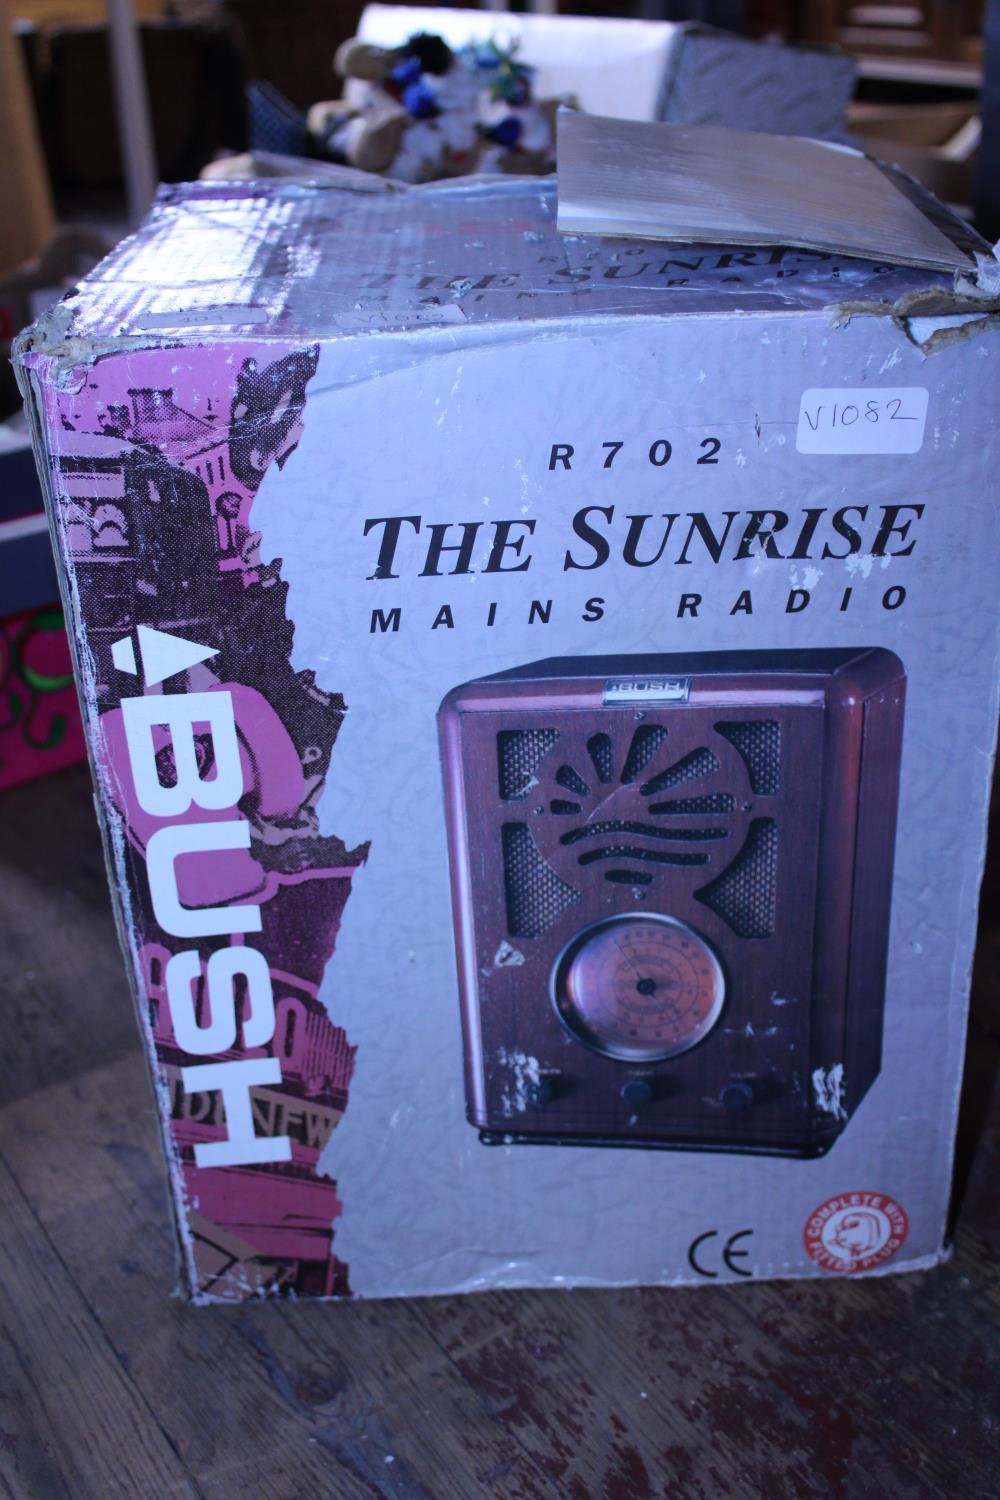 A vintage style Bush radio